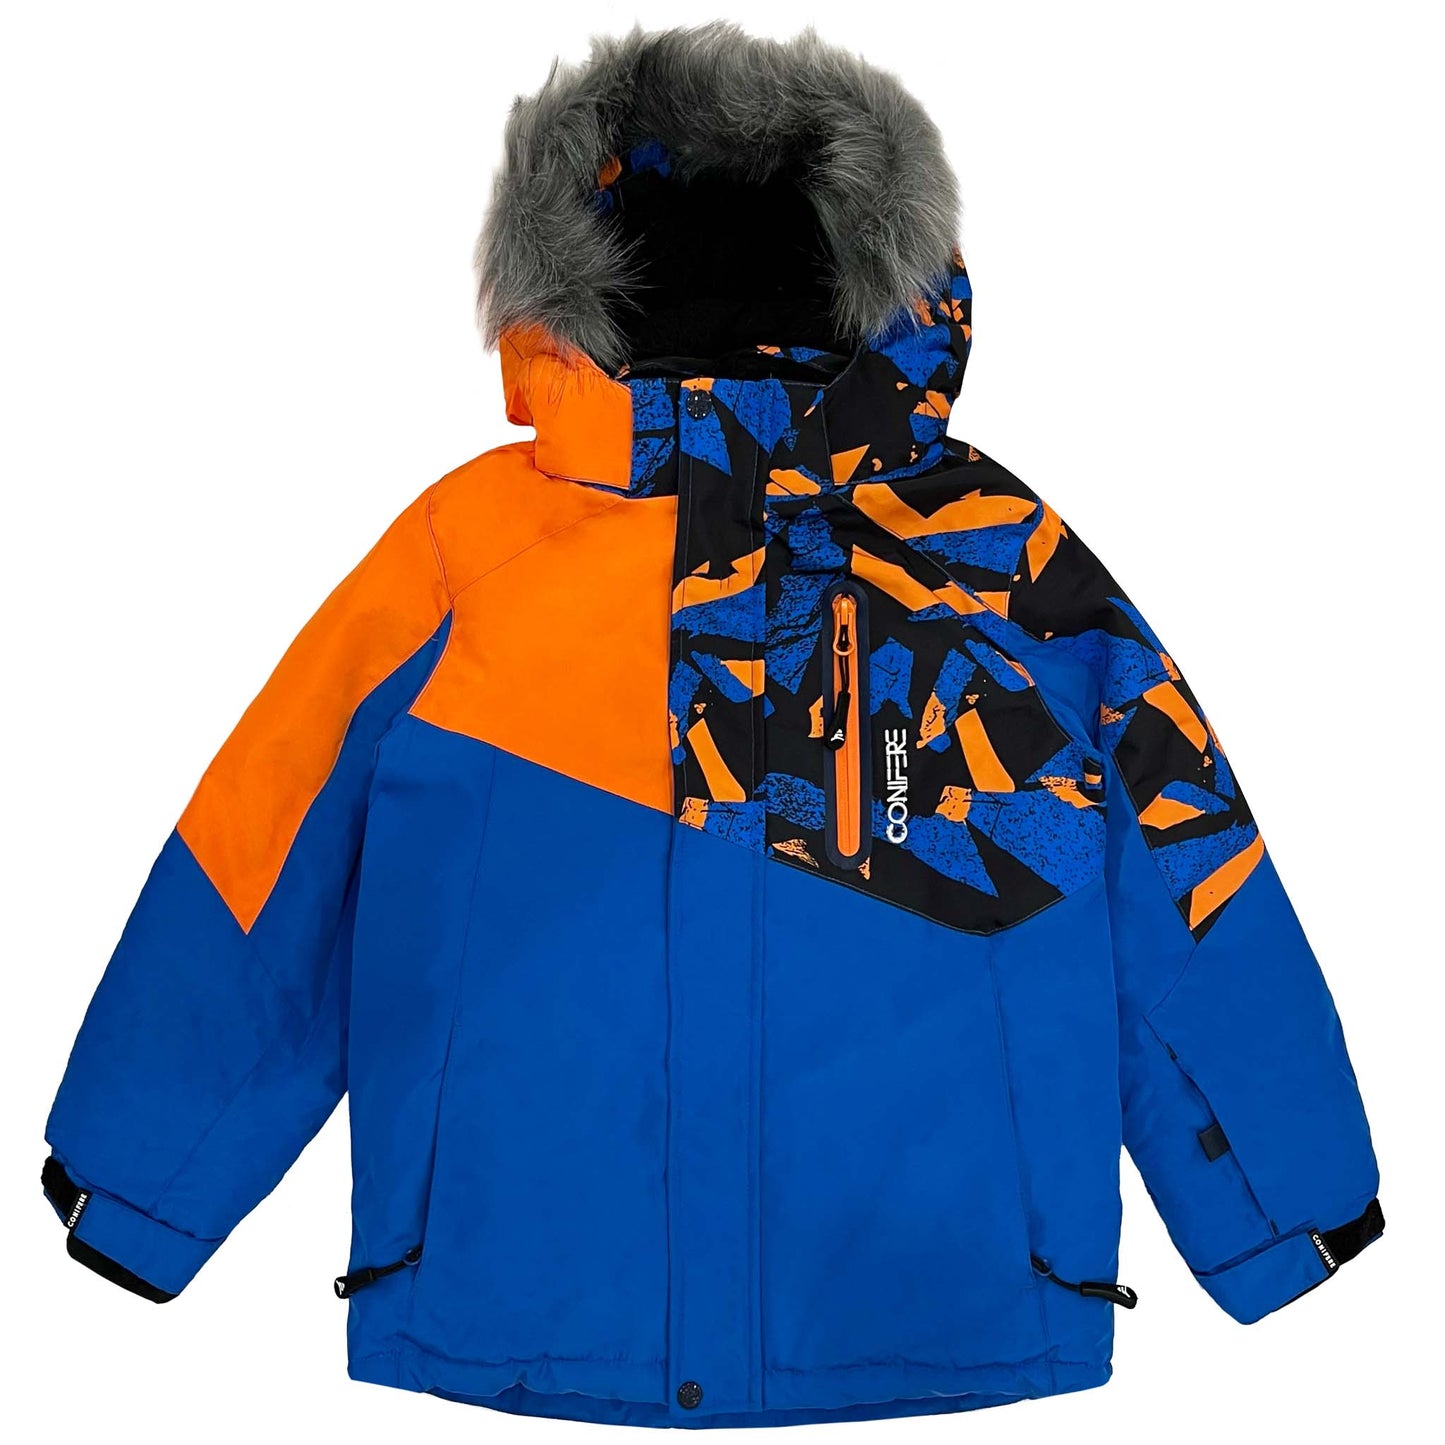 MASSIF - Boys Blue/Orange Snowsuit Set